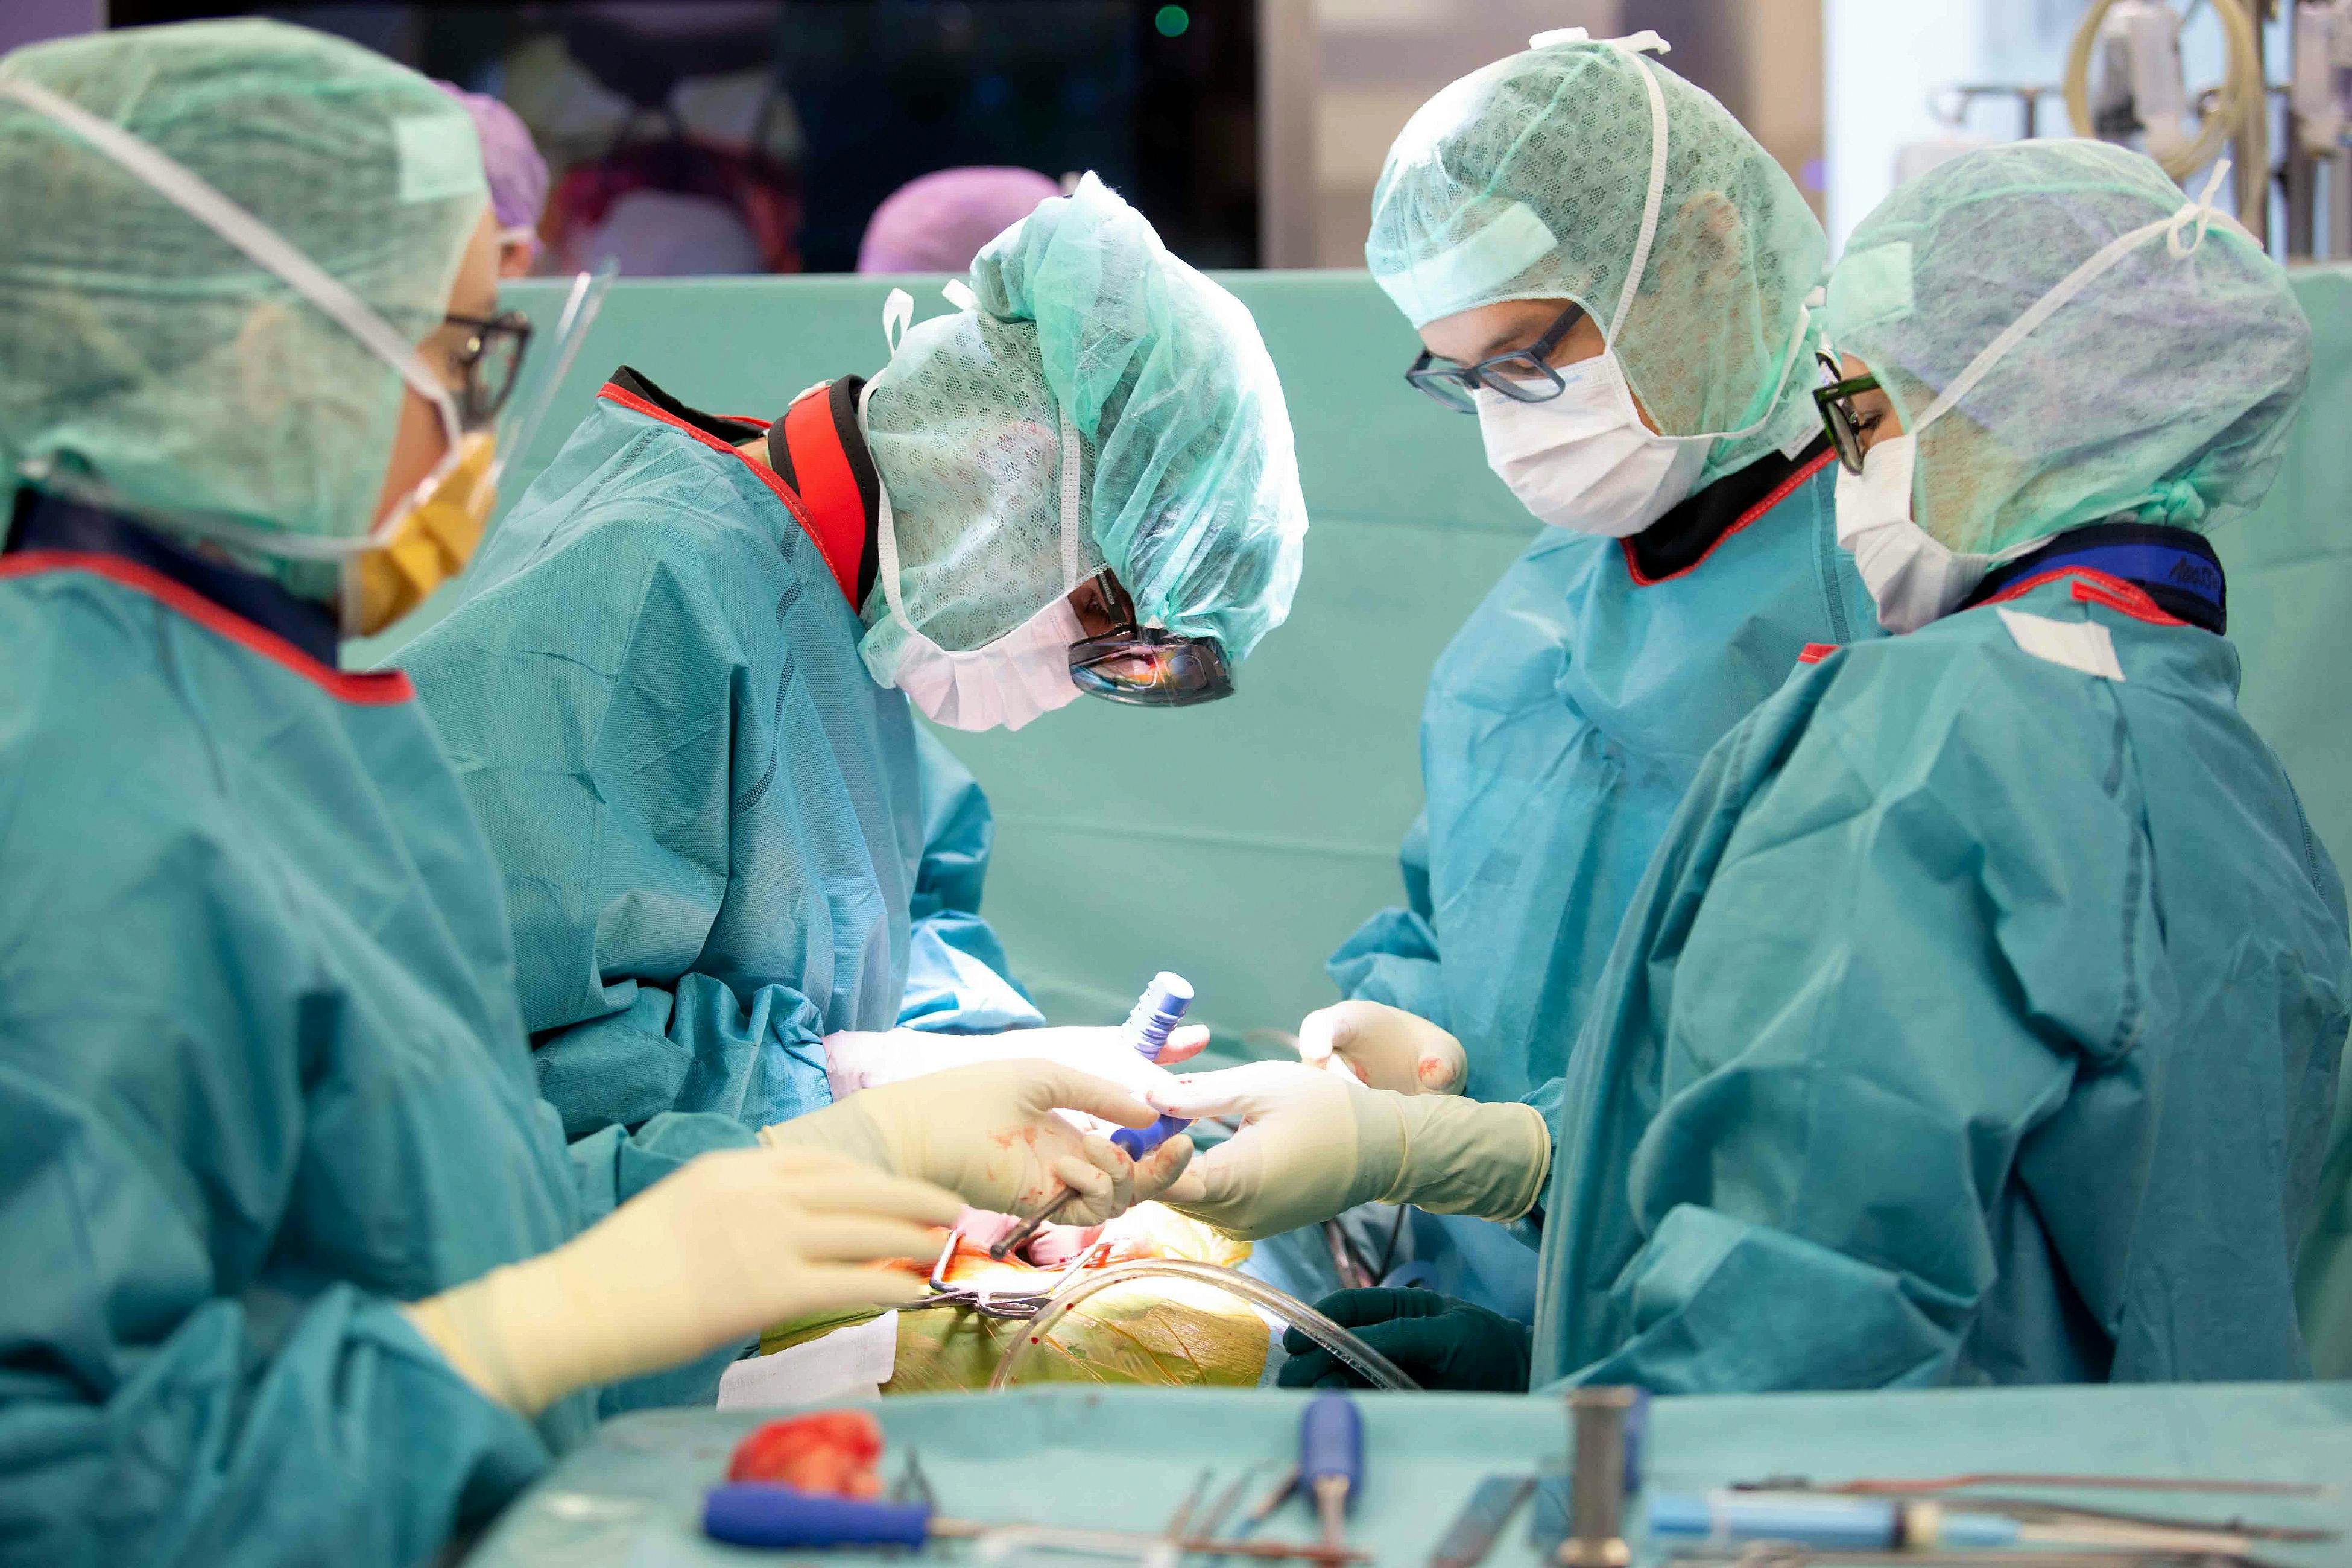 During spinal surgery at Balgrist University Hospital